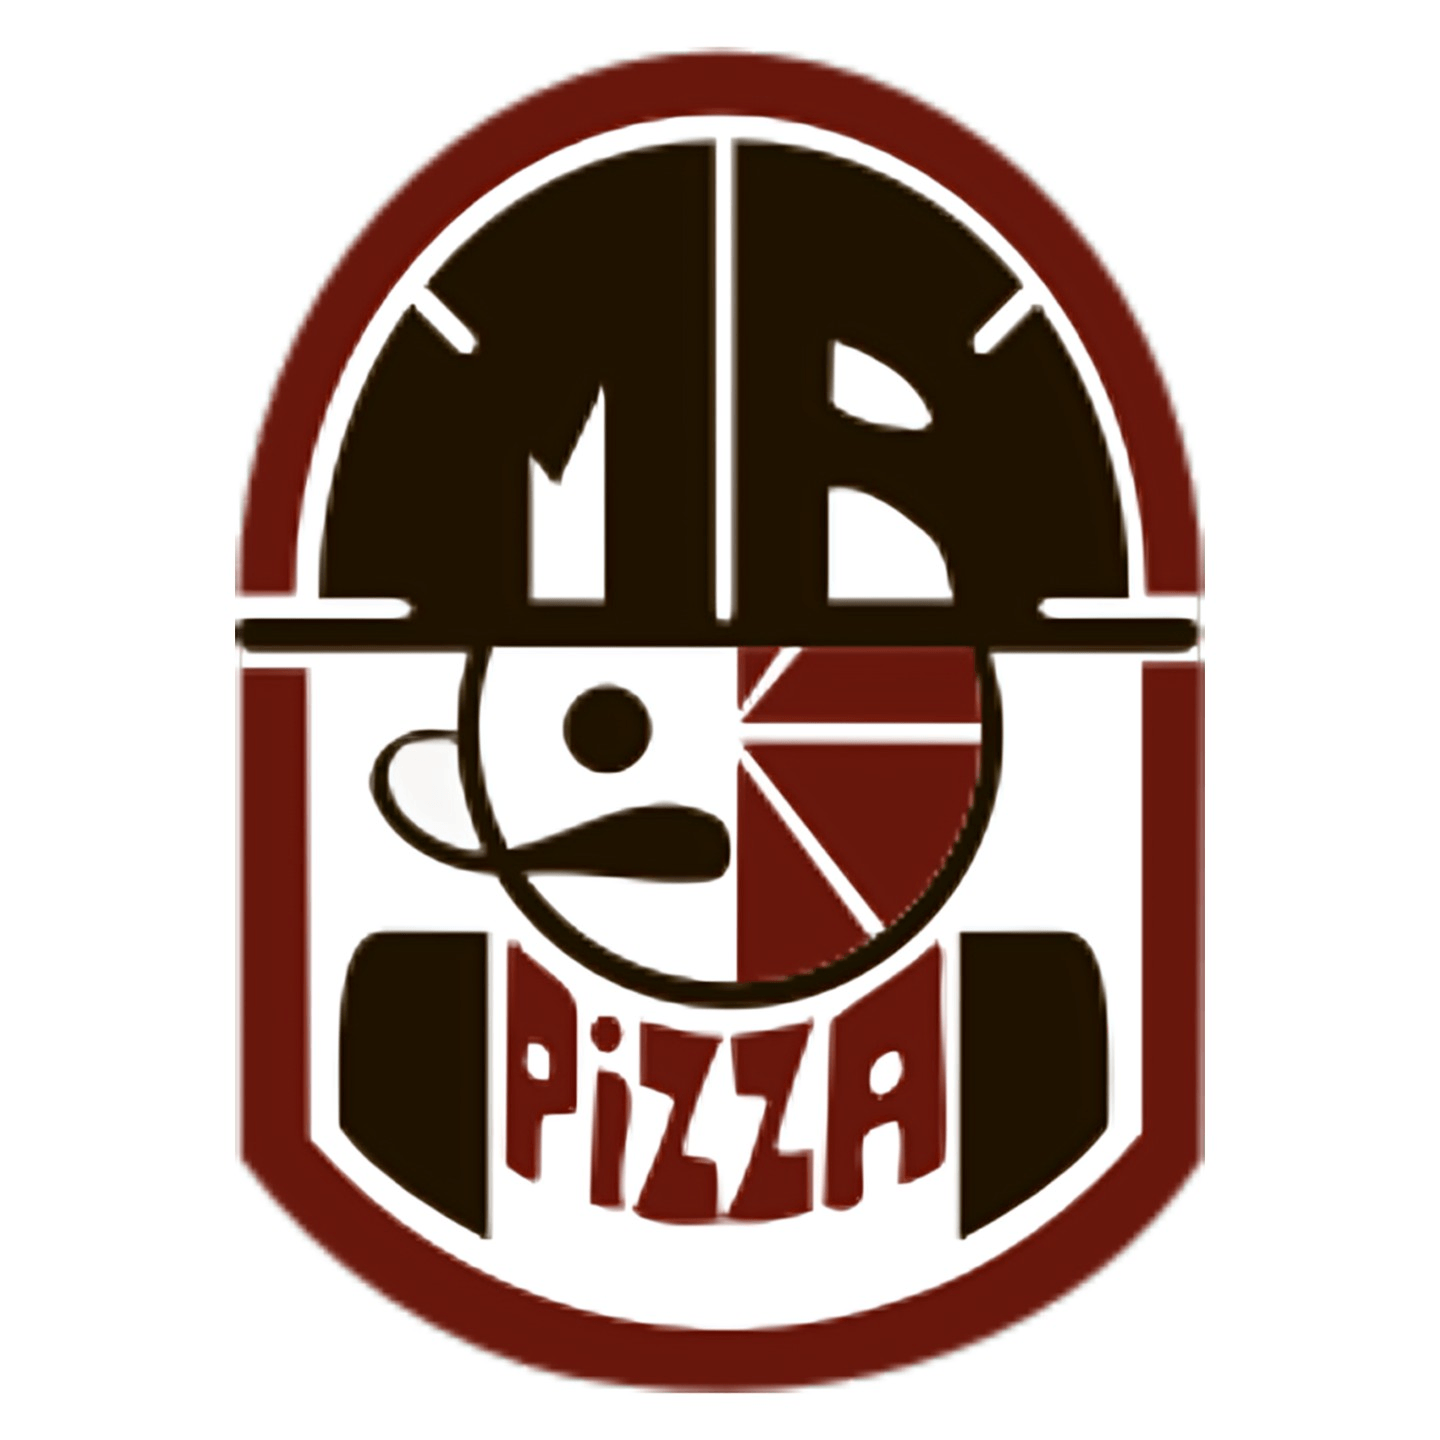 Meet Mr. Pizza: Crafting Italian Magic Since 1973